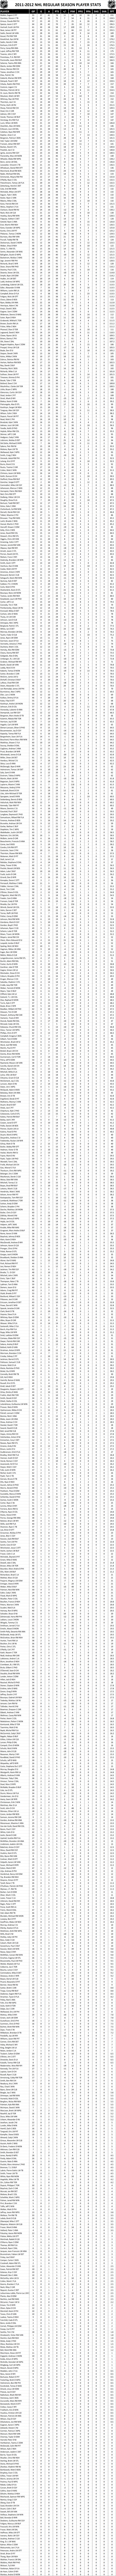 2011-2012 National Hockey League Pool Season Player Stats